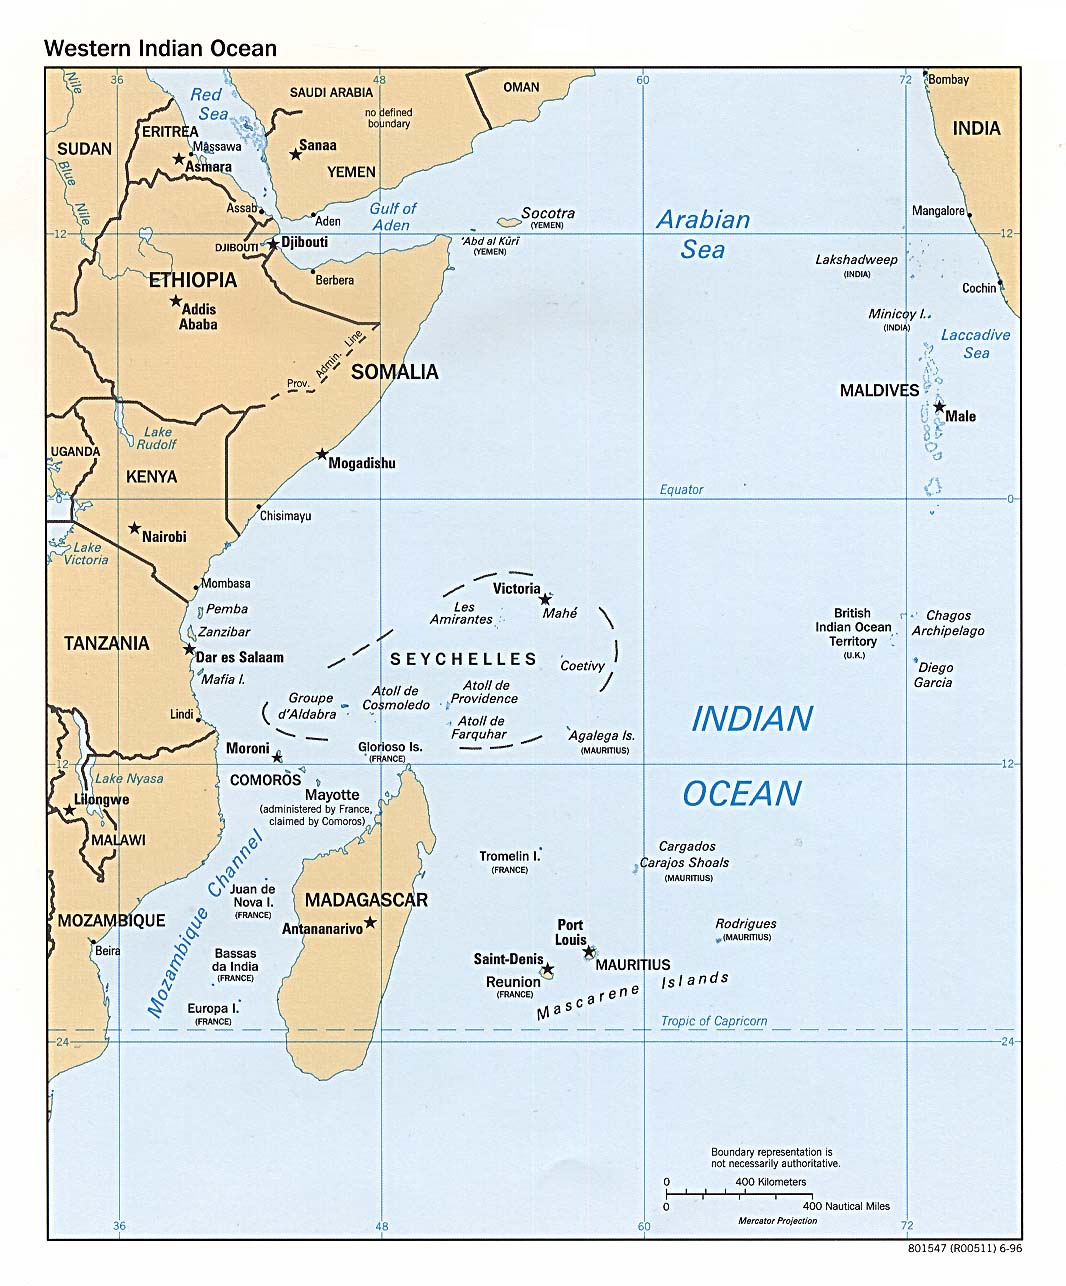 Mapa Politico del Océano Índico Occidental